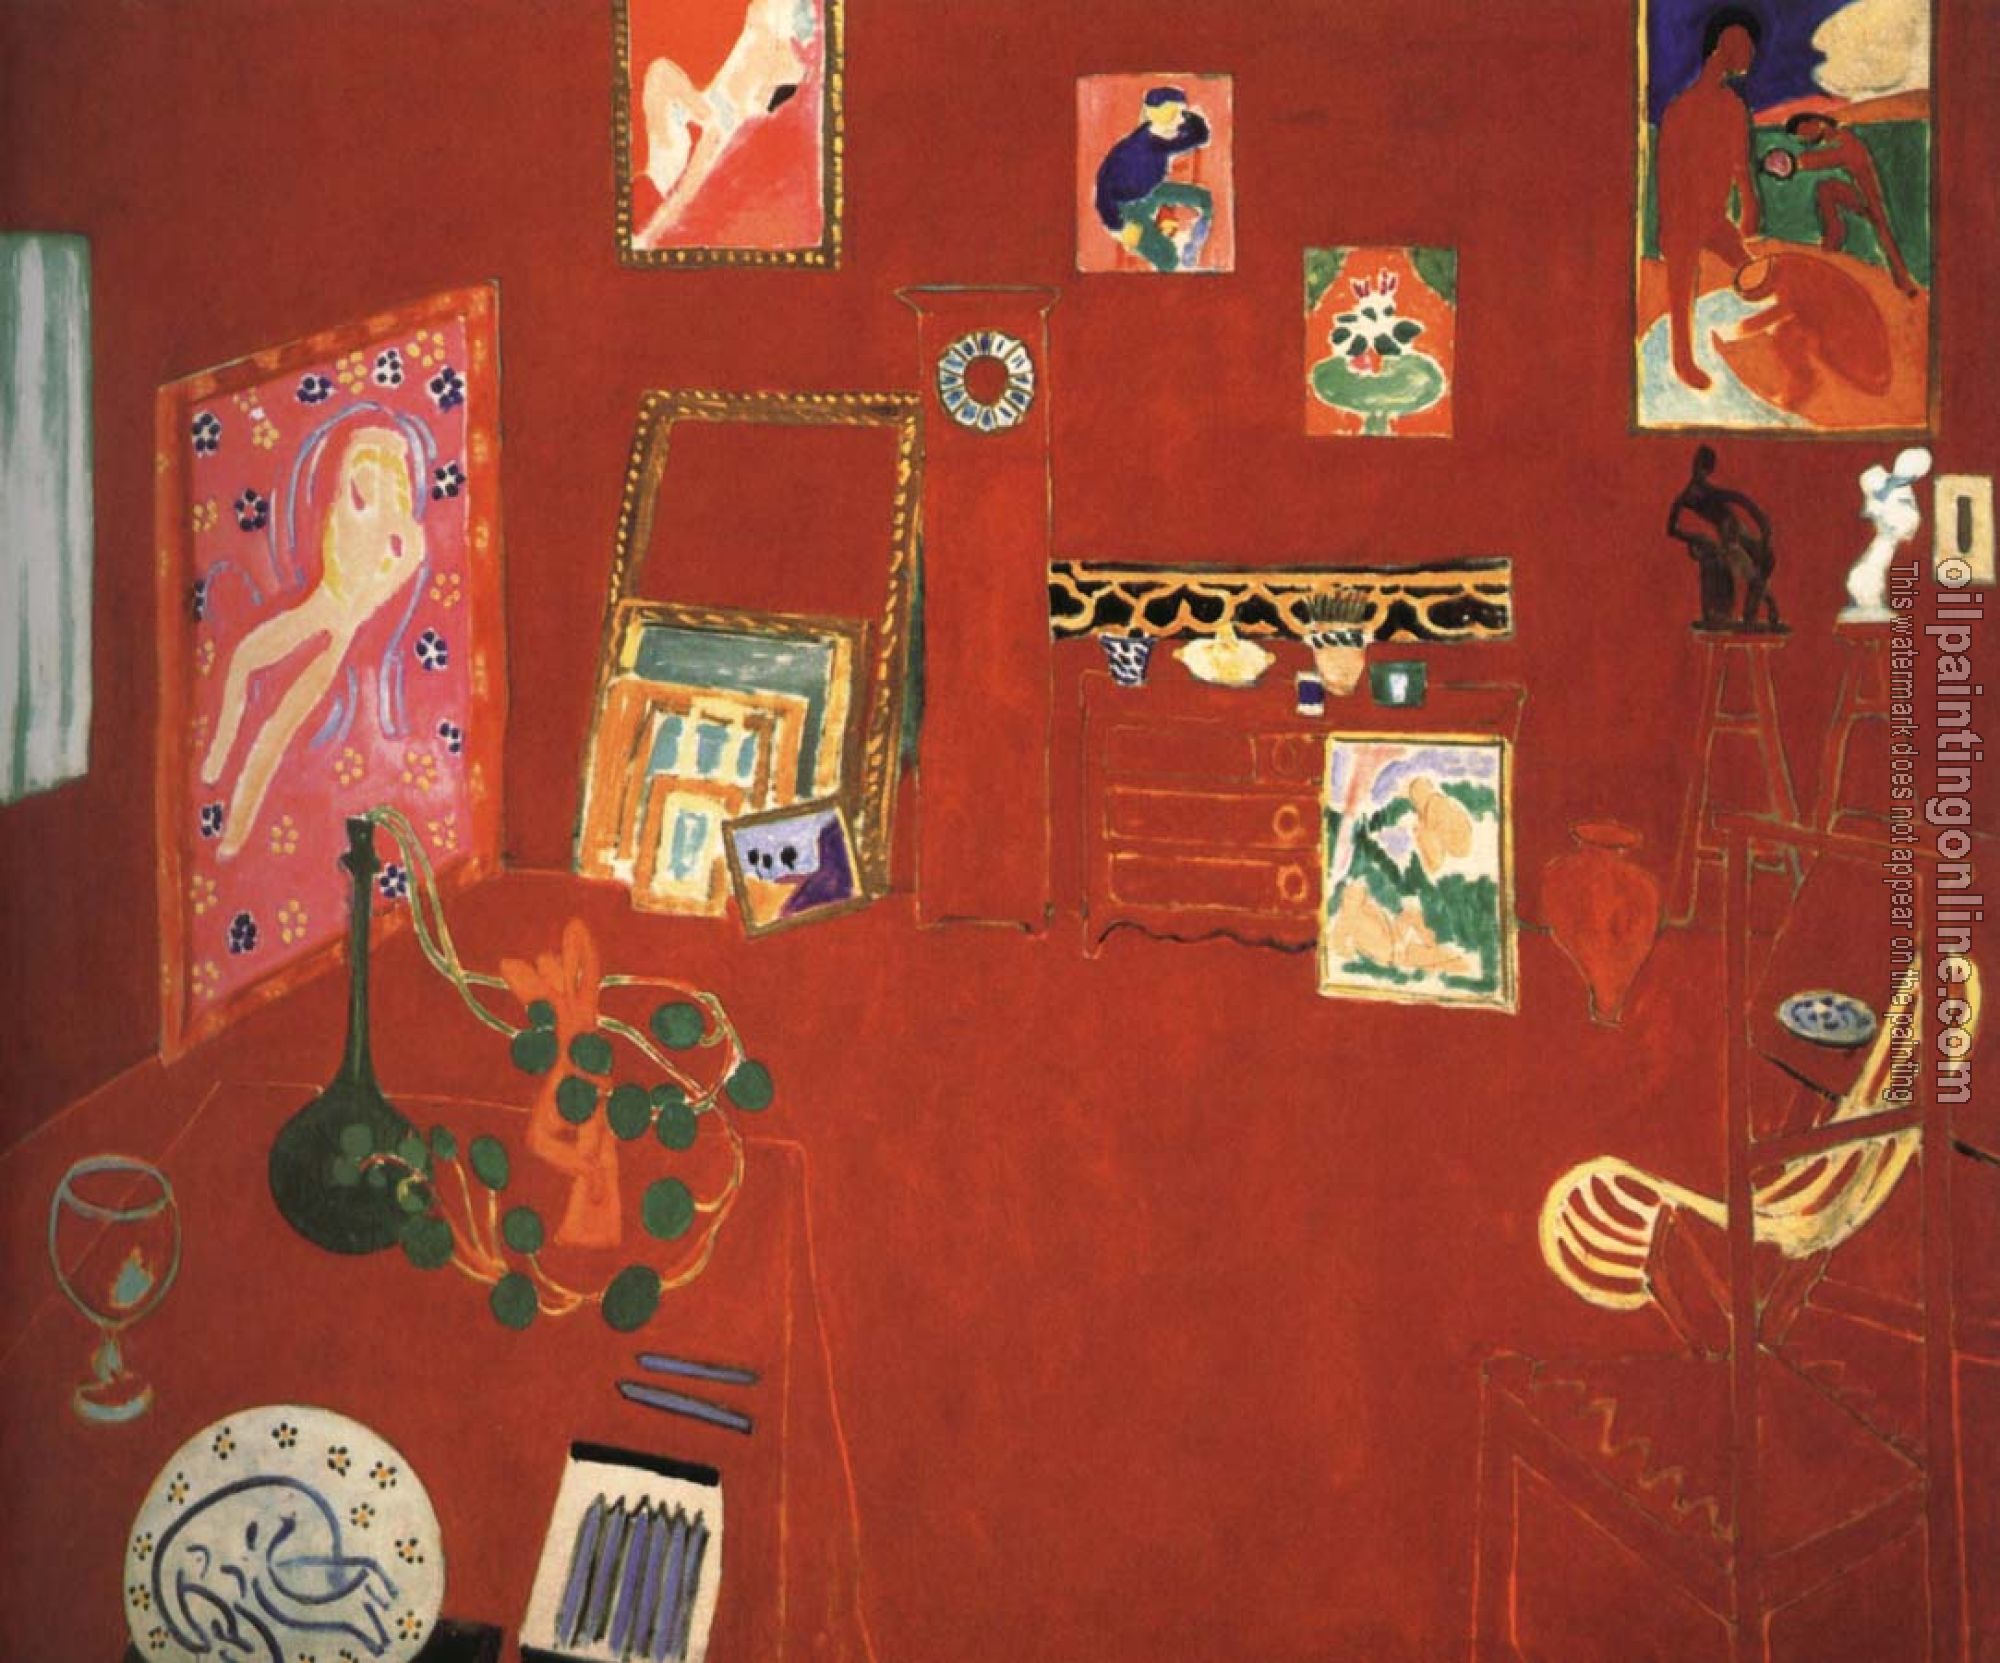 Matisse, Henri Emile Benoit - the red studio